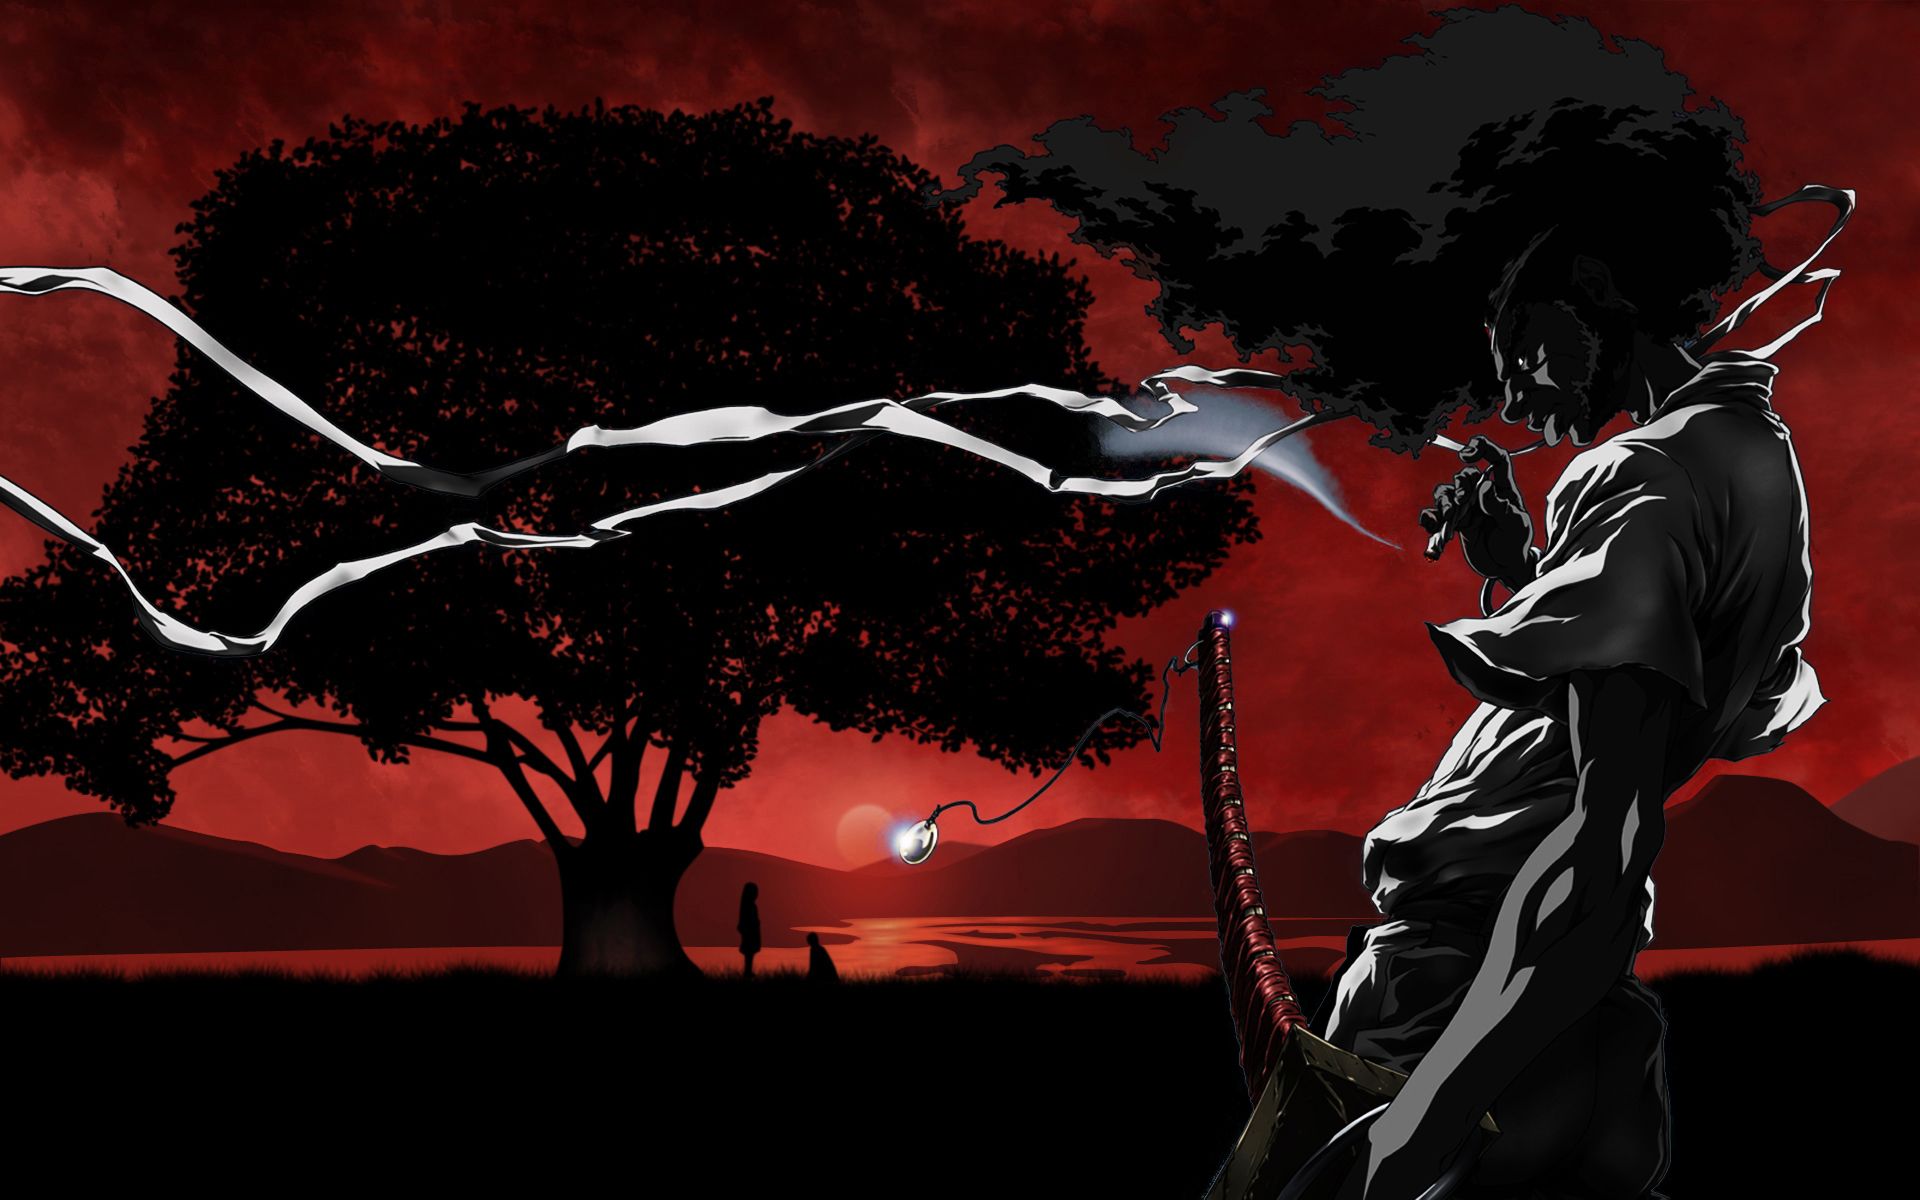 Afro Samurai, anime, sword, the red sky, the lake - Samurai